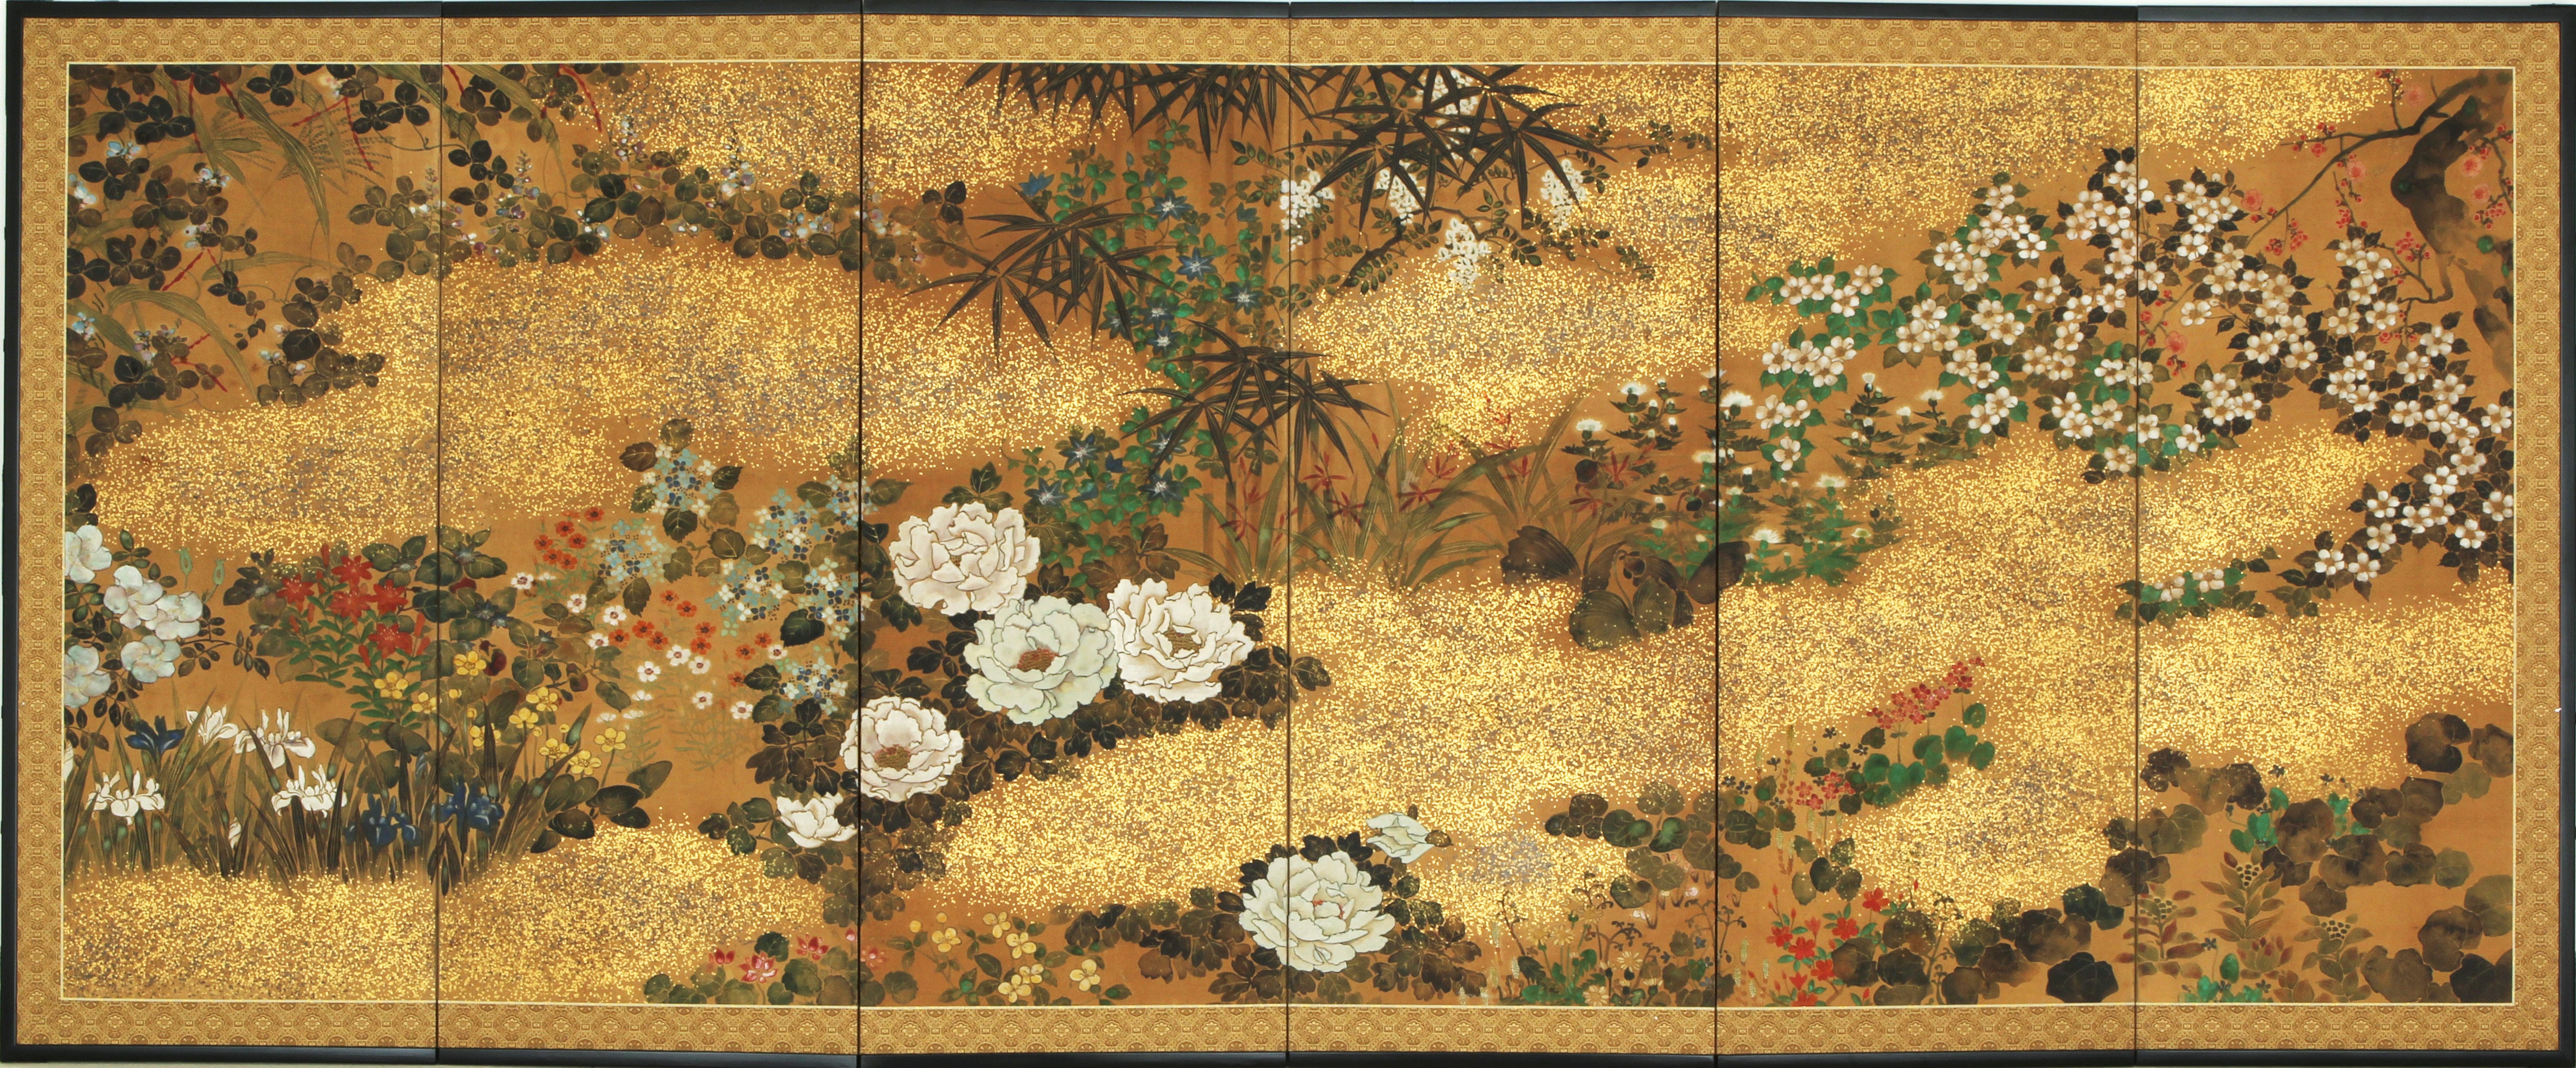 Japanese Screen with Seasonal Flowers